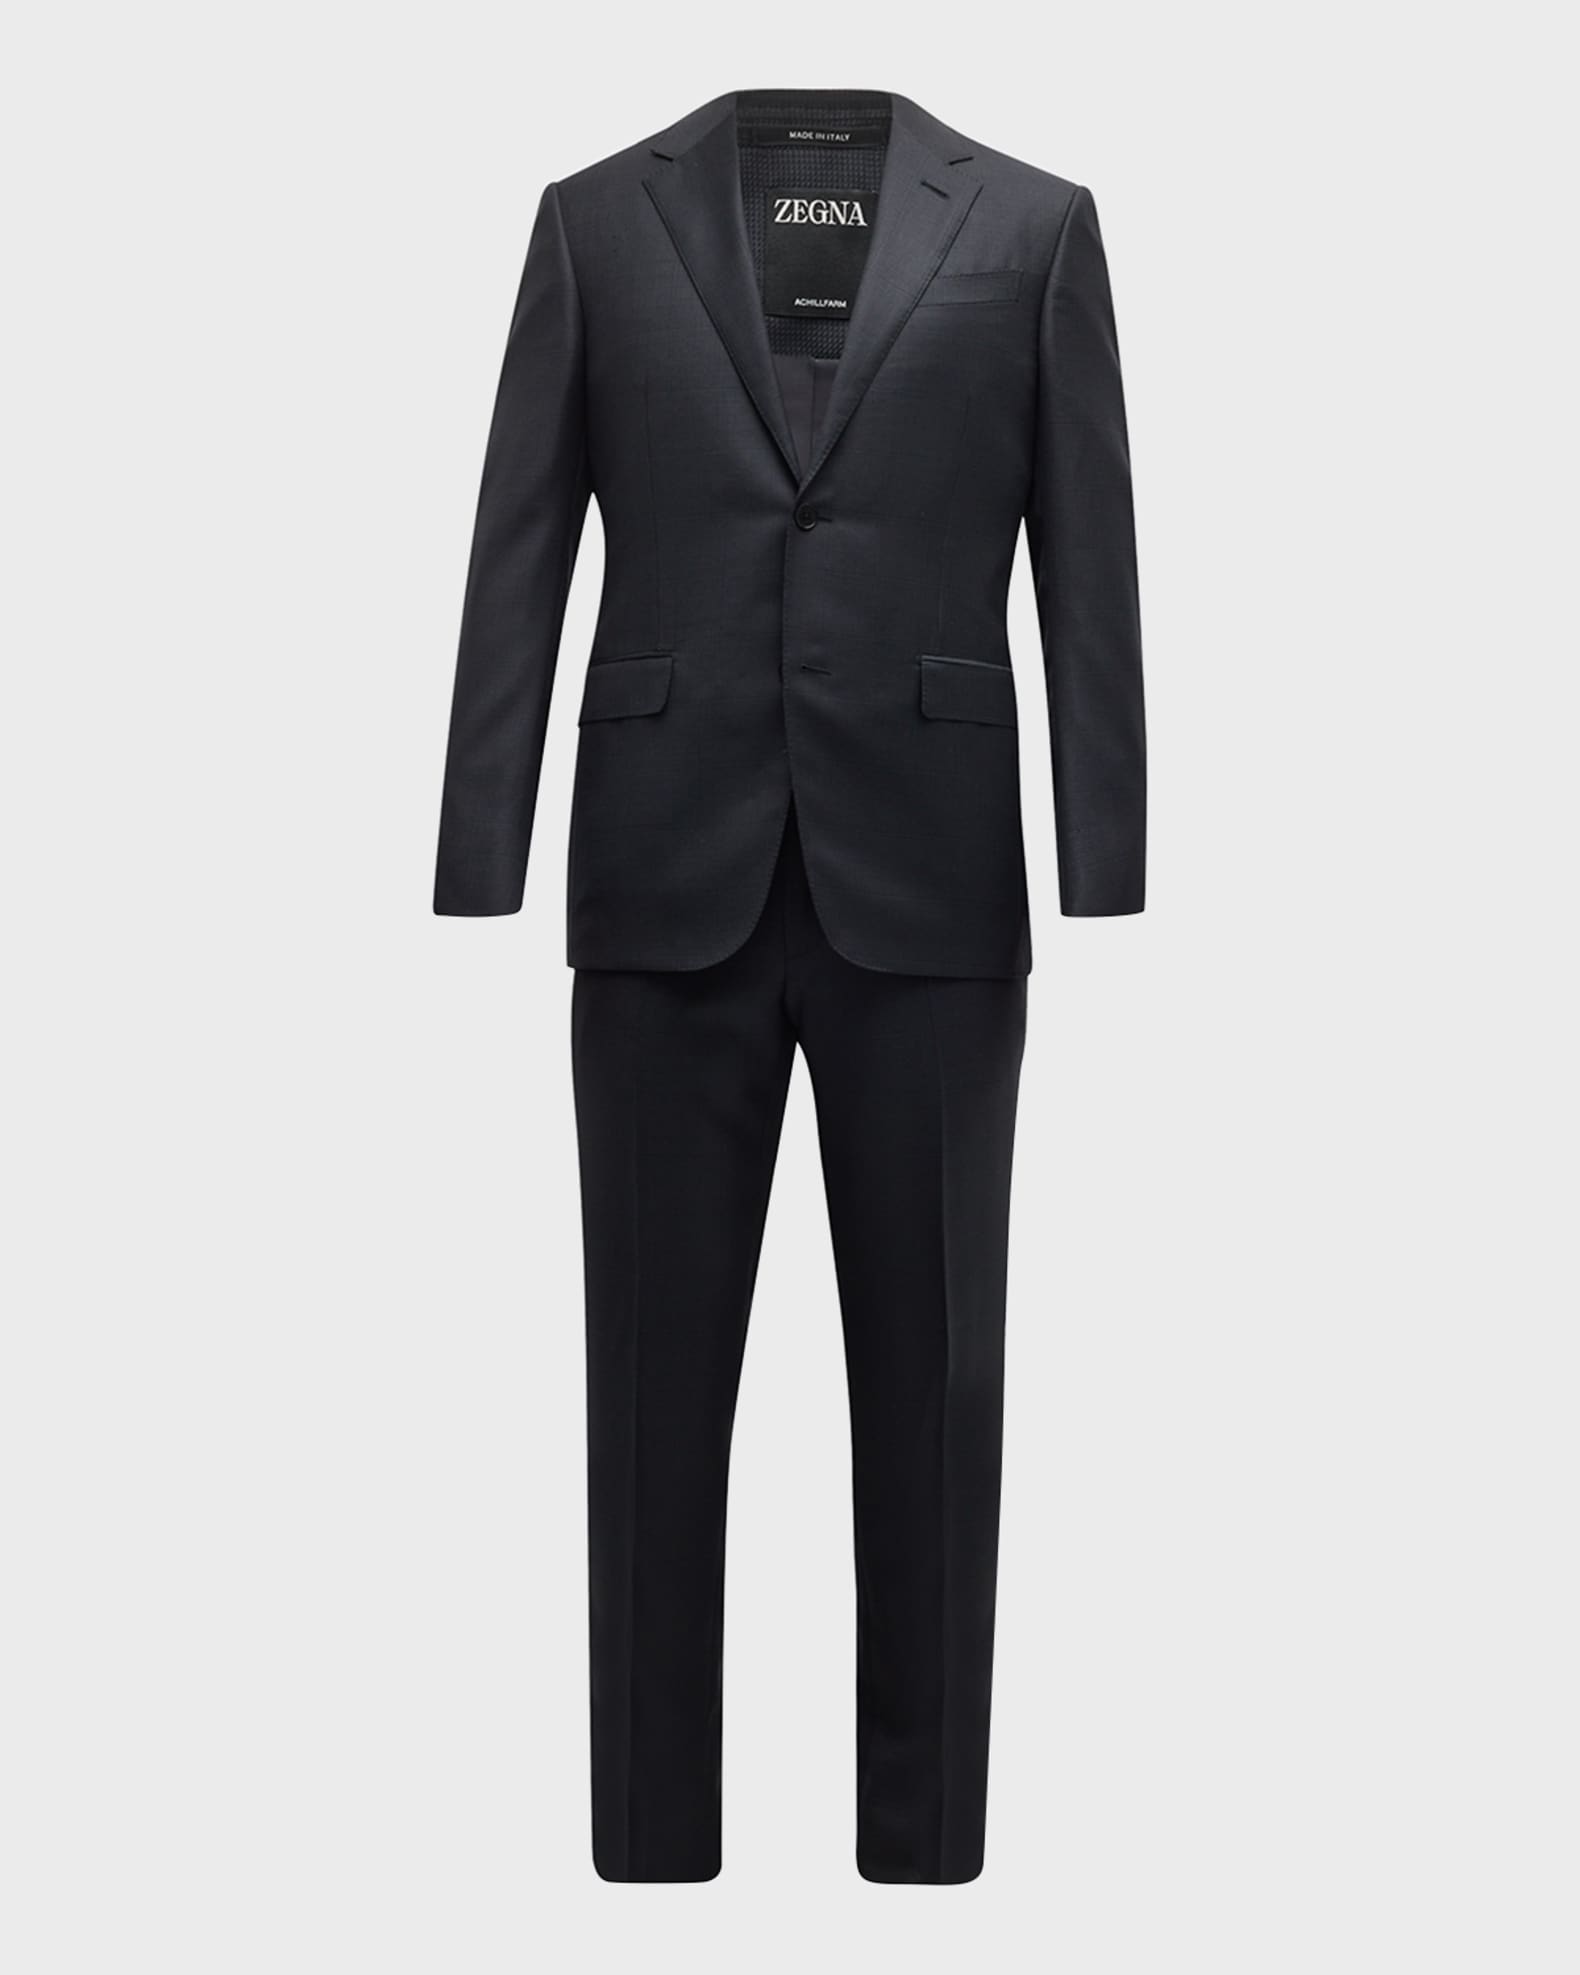 ZEGNA Men's Tonal Plaid Wool Suit | Neiman Marcus